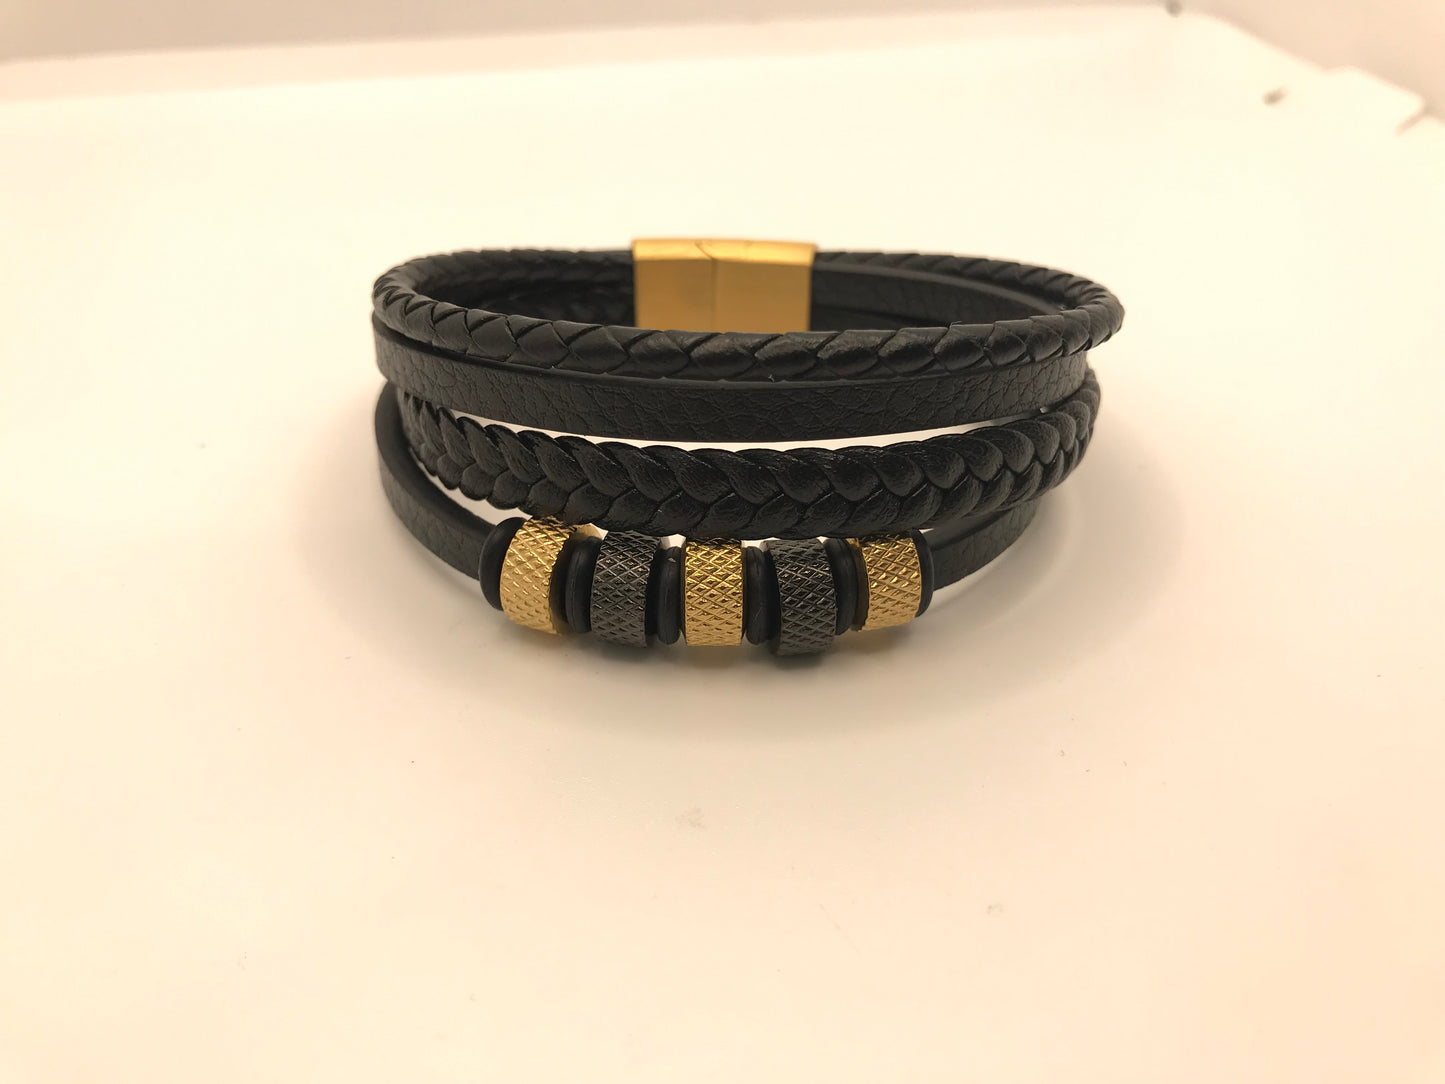 Beaded leather bracelet